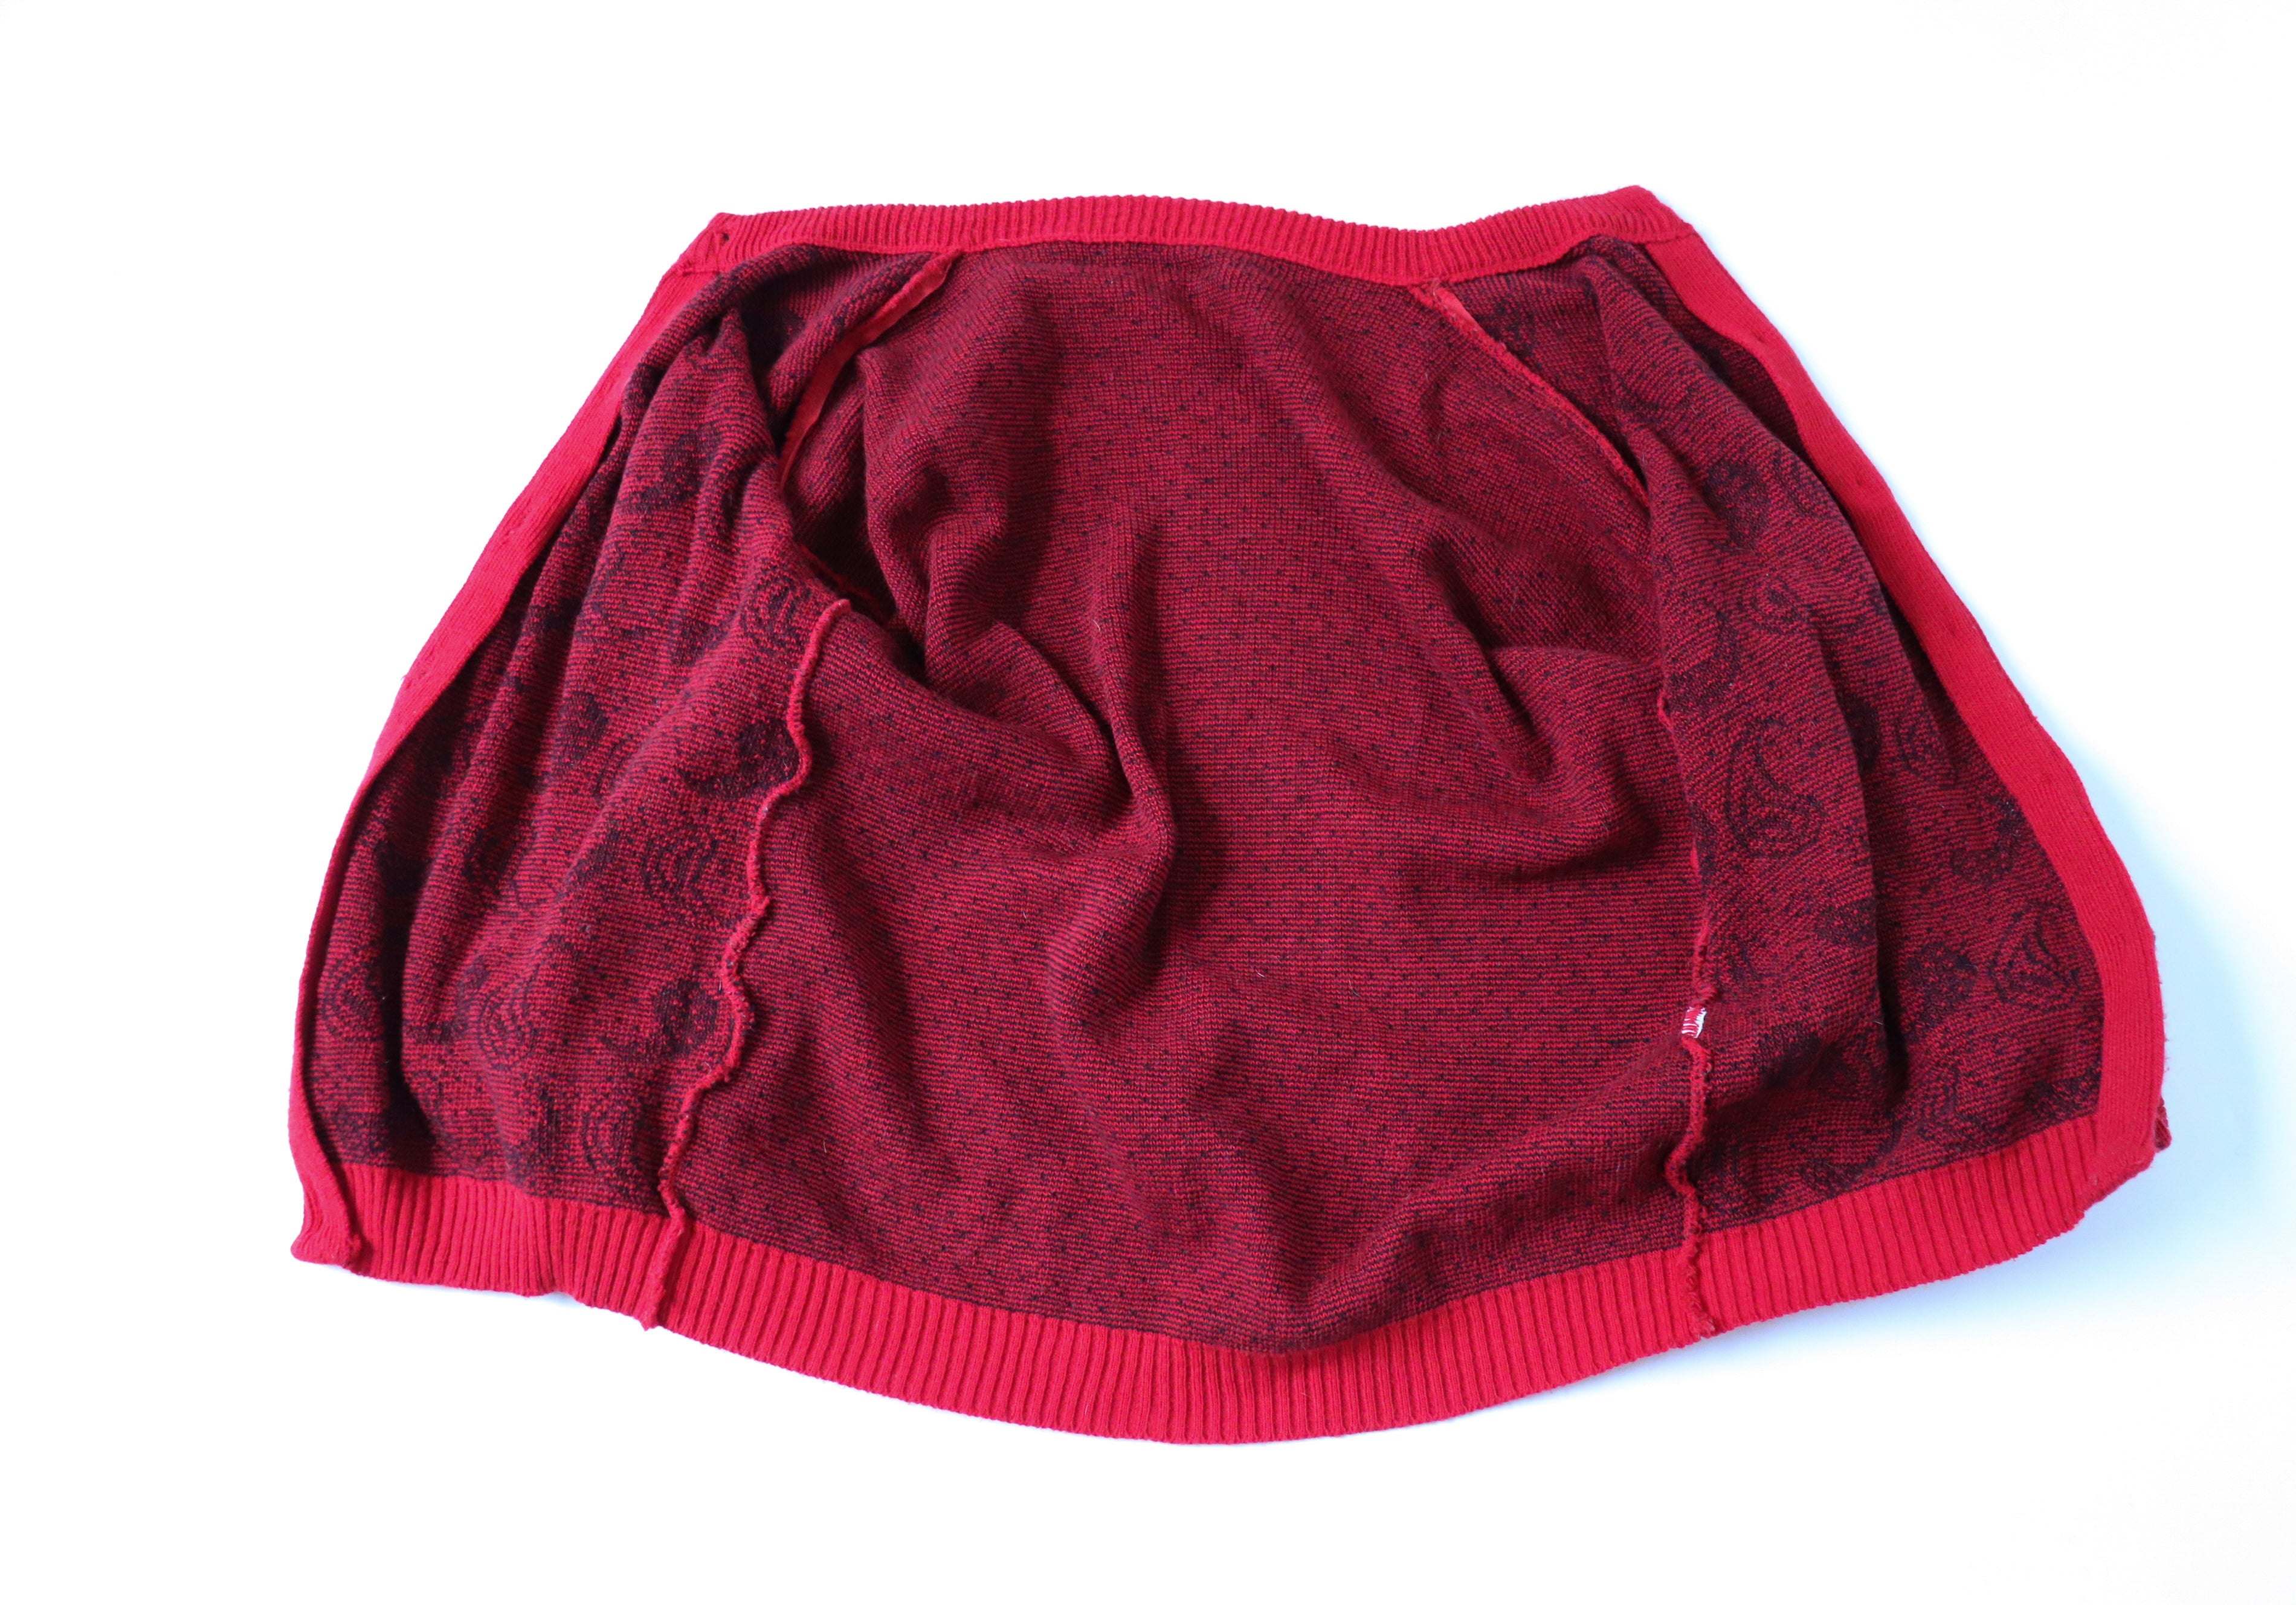 Vintage Red / Black Cardigan - Paisley Pattern - Drop Shoulder - M / UK 12